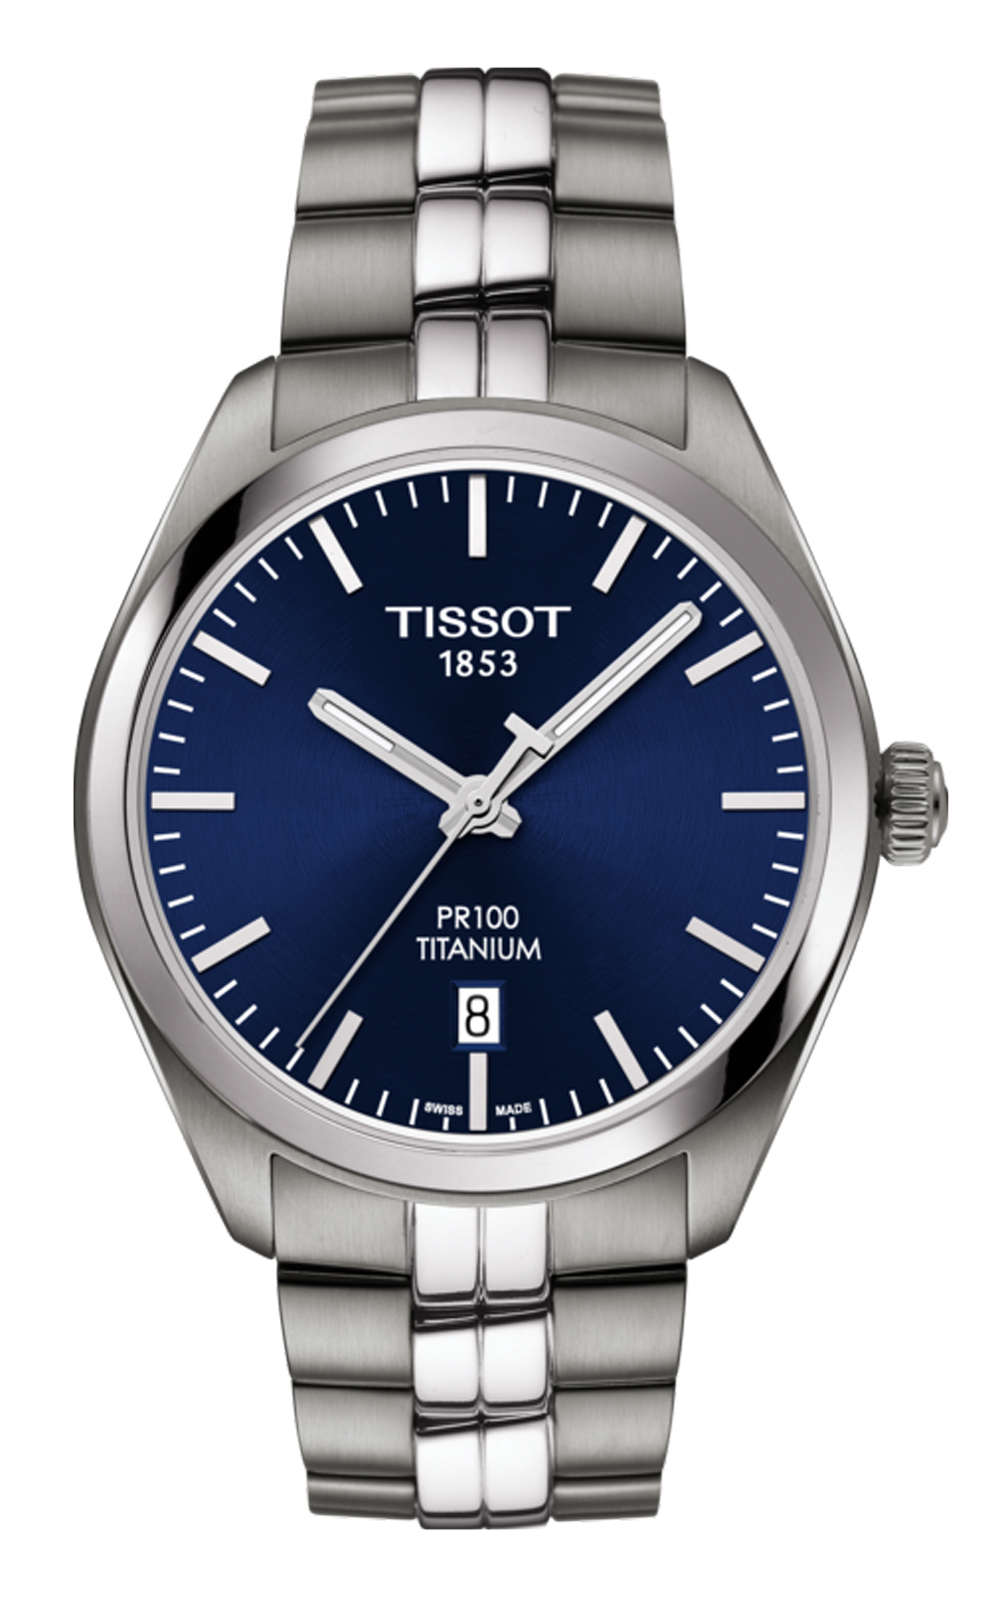 Đồng hồ nam Tissot T101.410.44.041.00